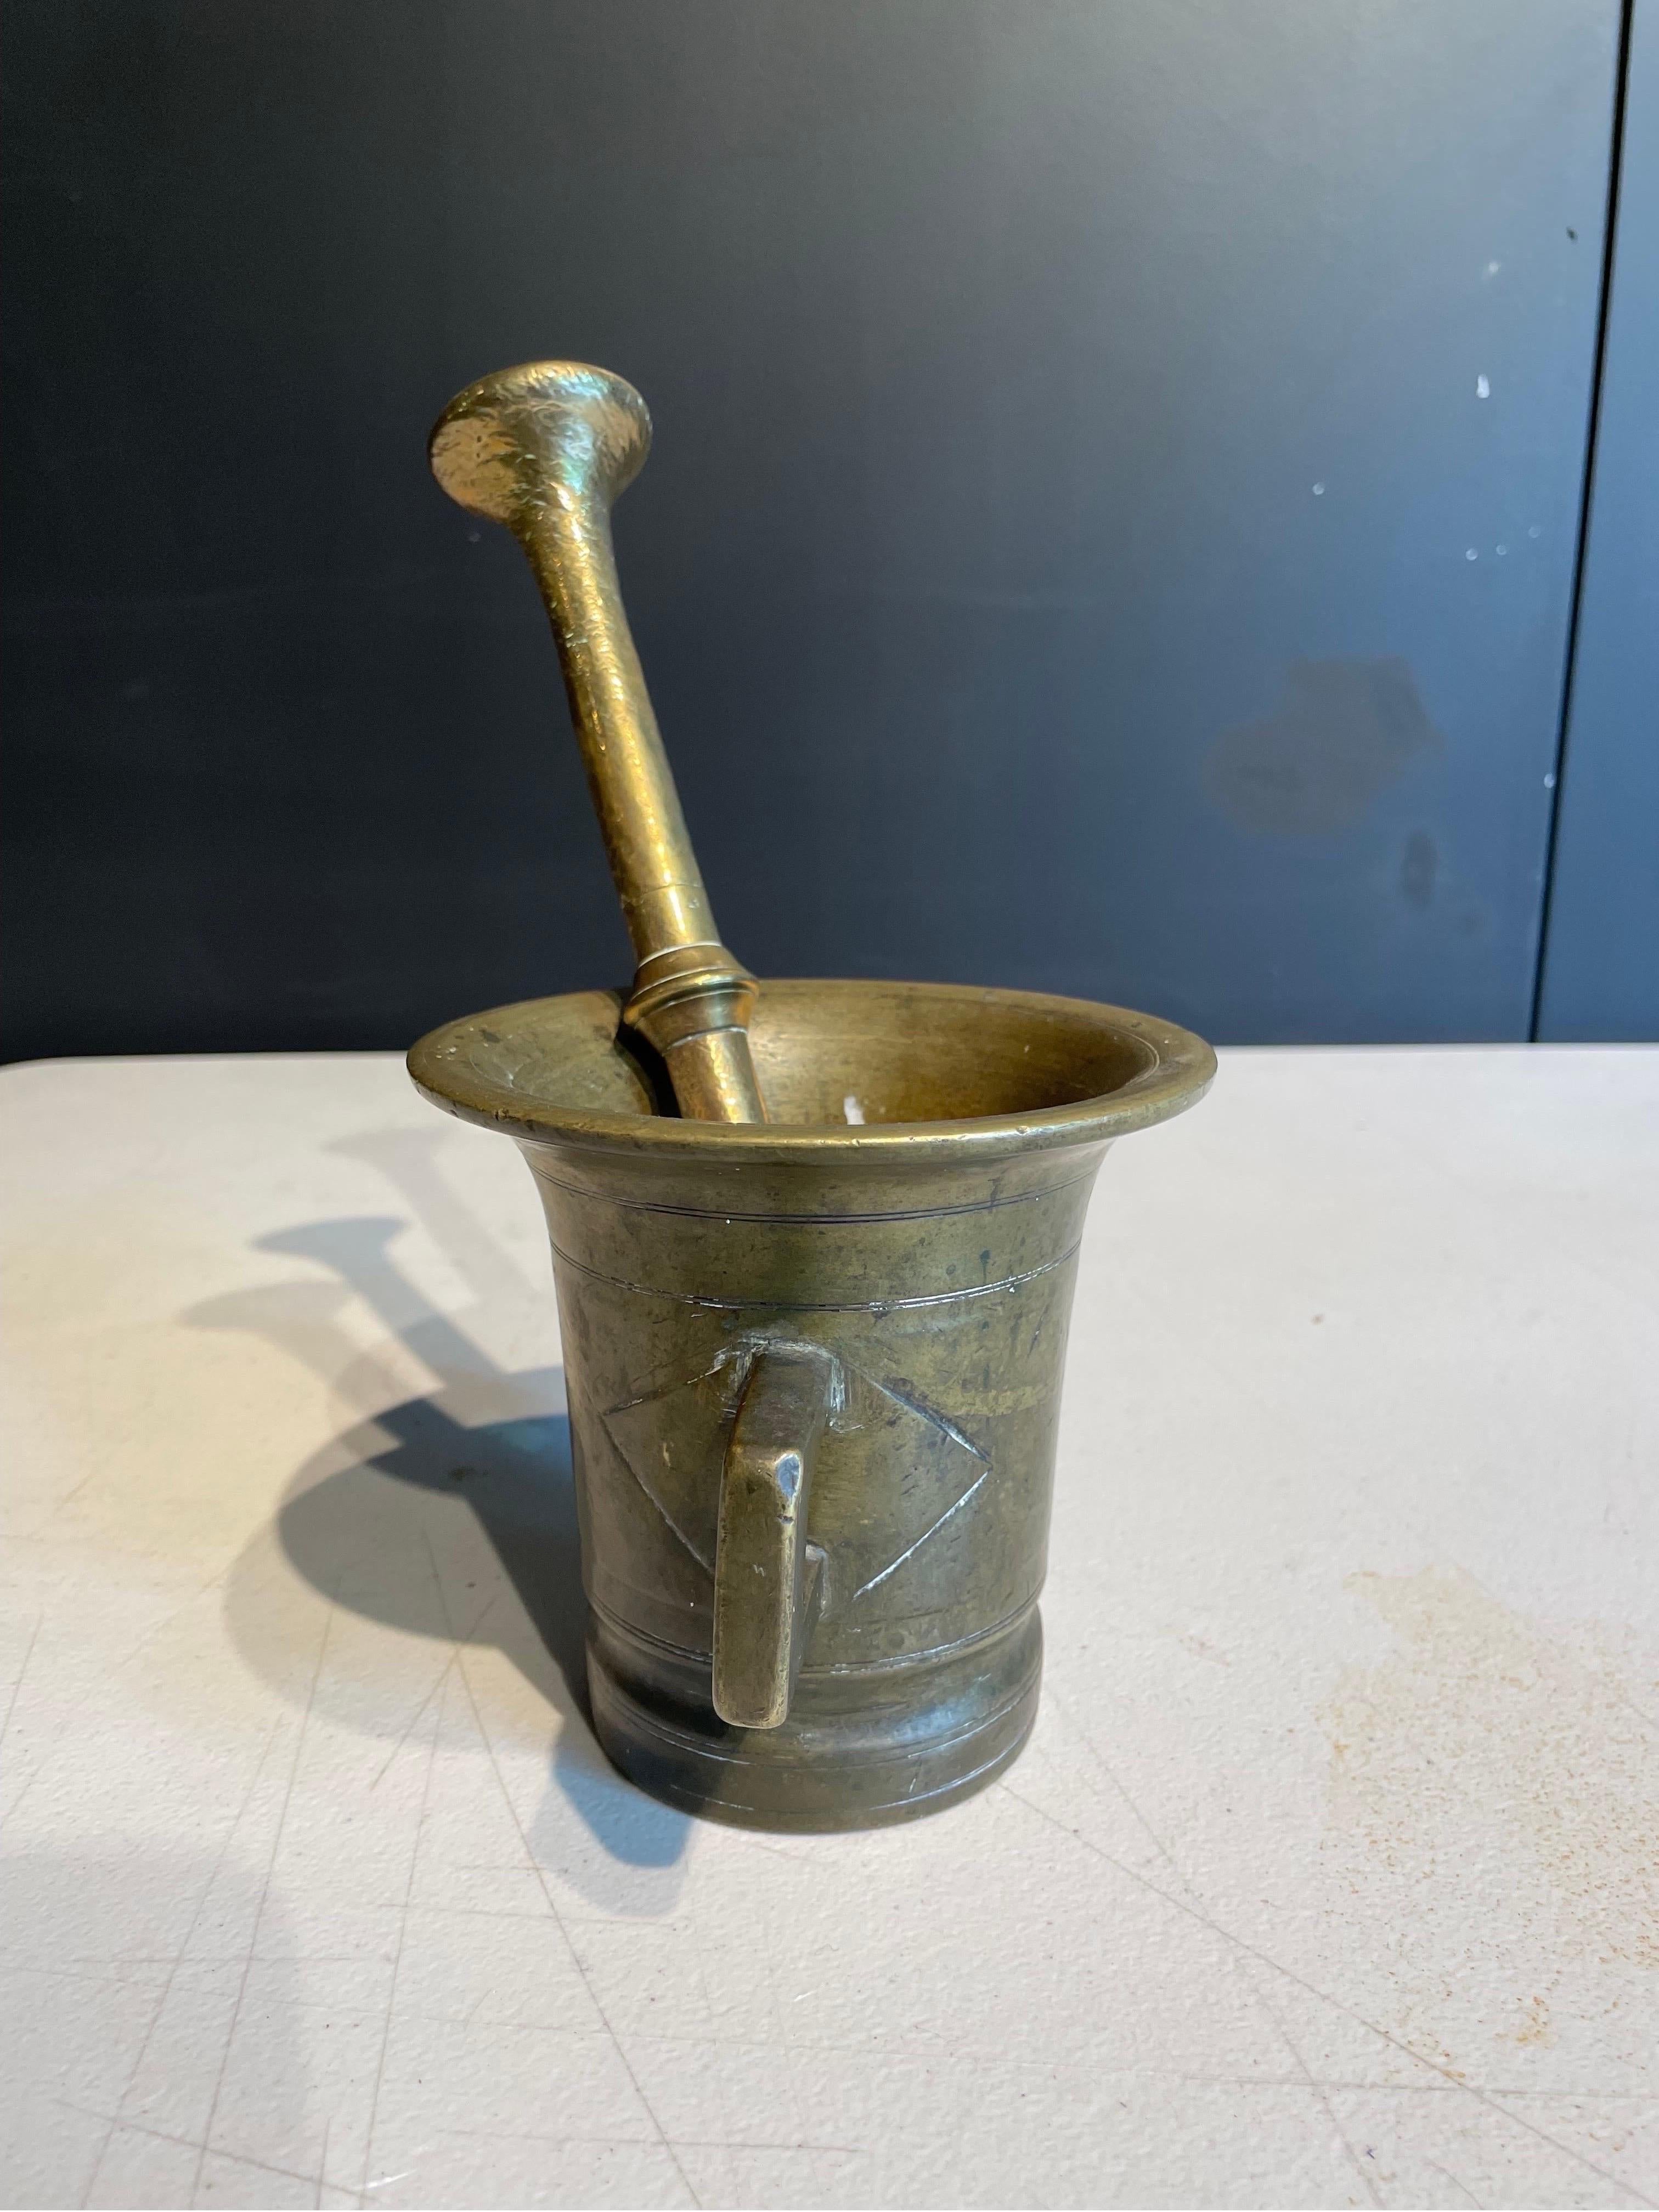 An Antique Brass Mortar with Pestle, 19th Century

Dimension: Mortar: Height: 11.5 cm Diameter: 14 cm. Pestle: Height: 24 cm Diameter: 4 cm.

Provenance: Private Sydney Collection.